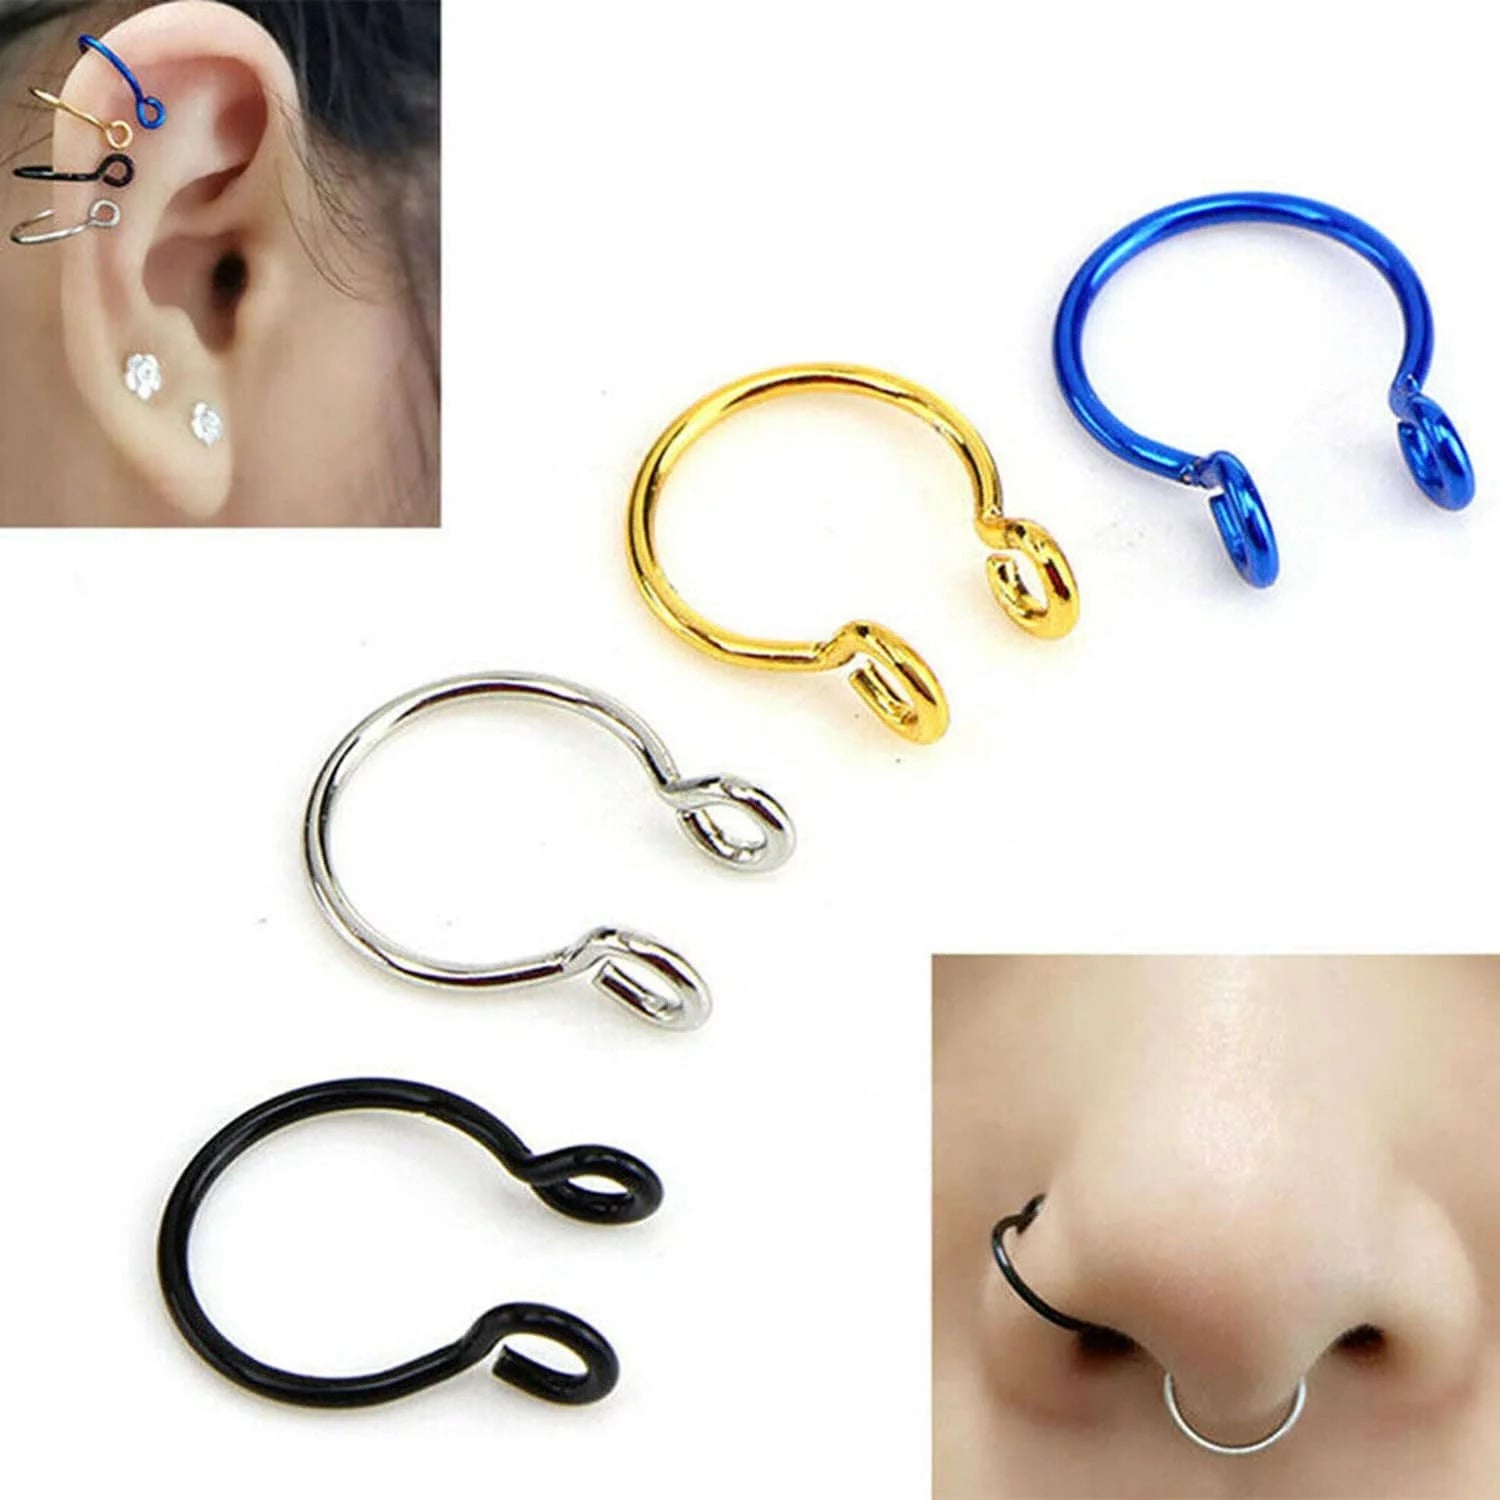 Nose Ring SEPTUM Nostril Gold Half Hoop Circular 16 gauge 16g 10mm dia – I  Love My Piercings!